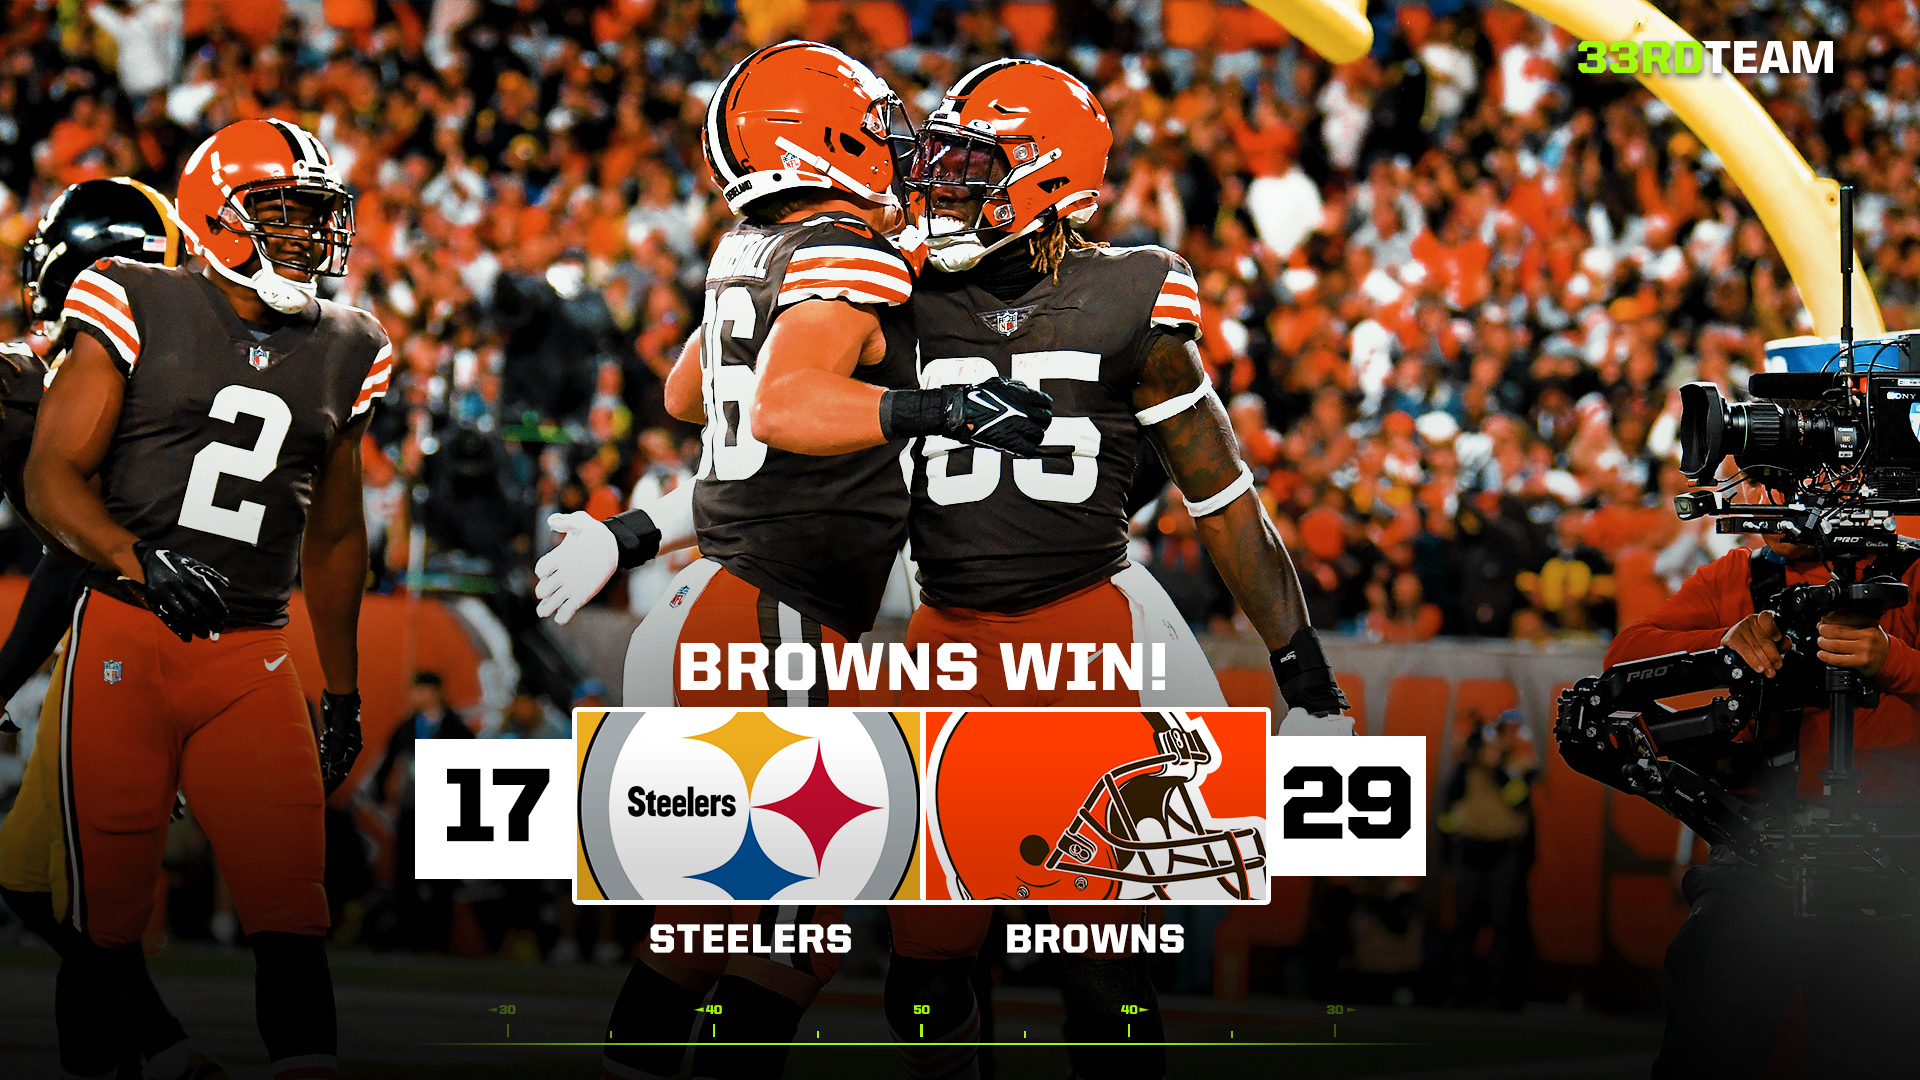 Browns Power Through Steelers 29-17 on Thursday Night Football